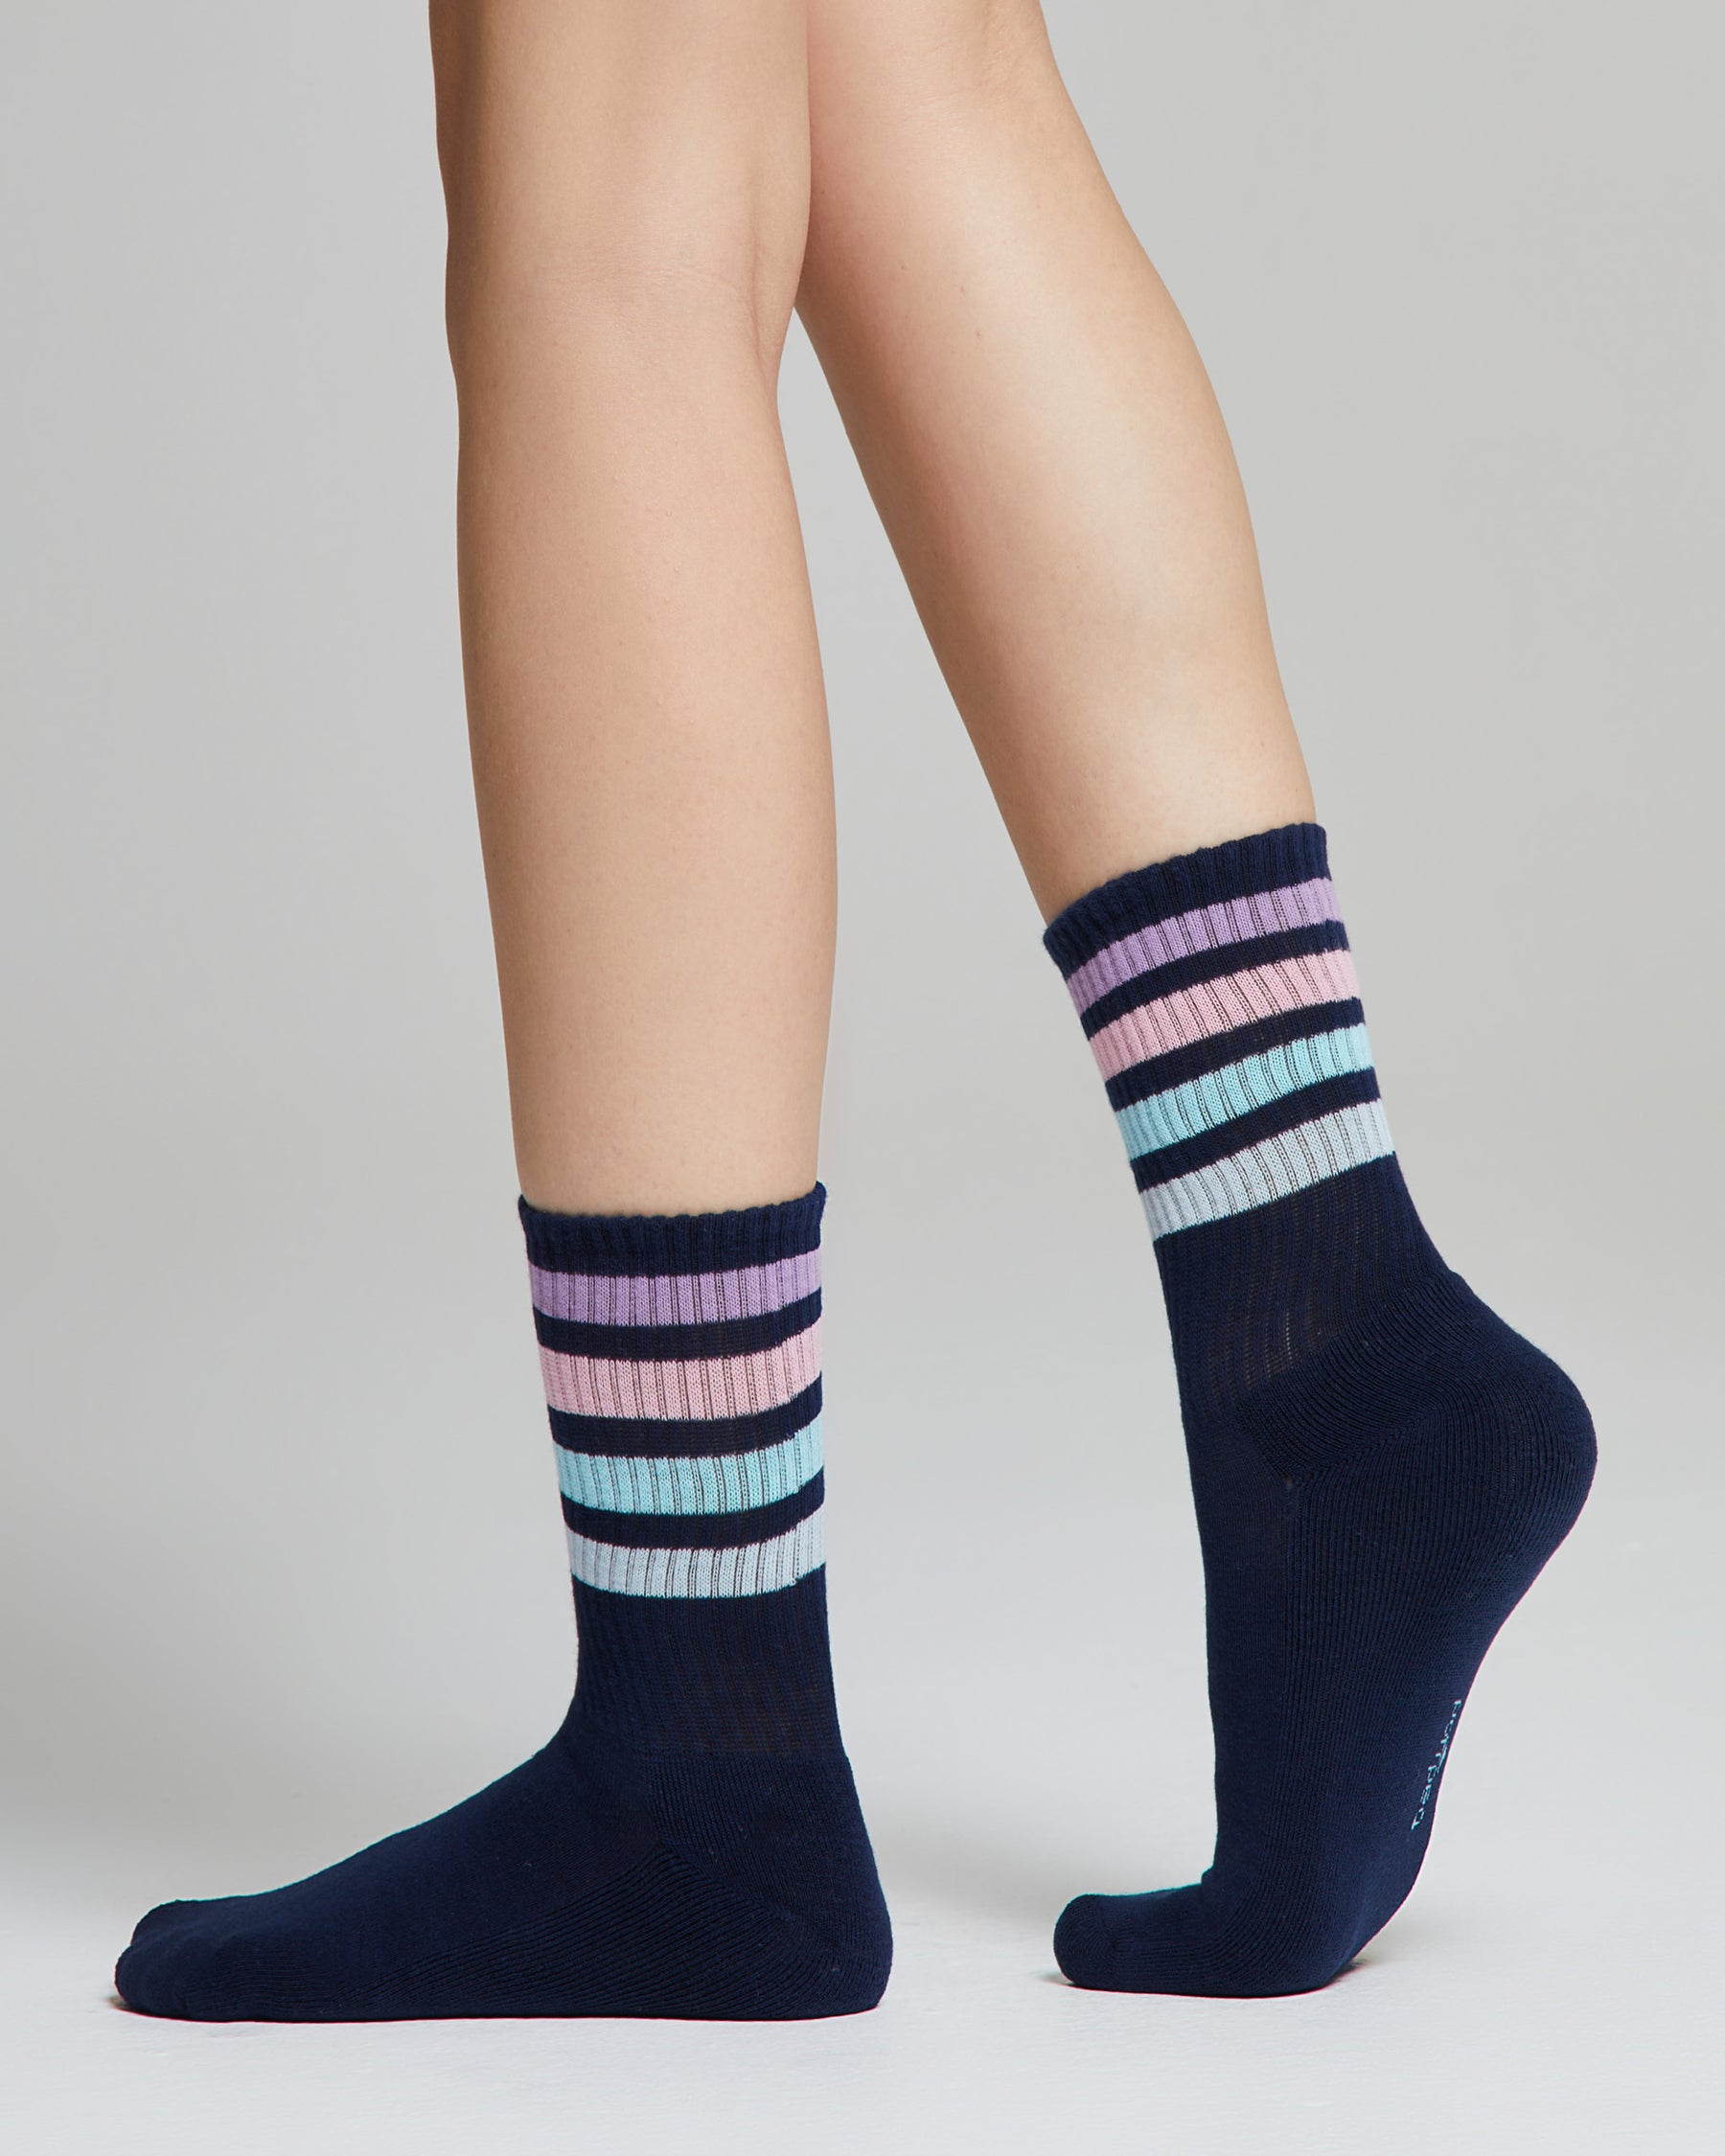 Chiara tennis socks with multi-colored stripes